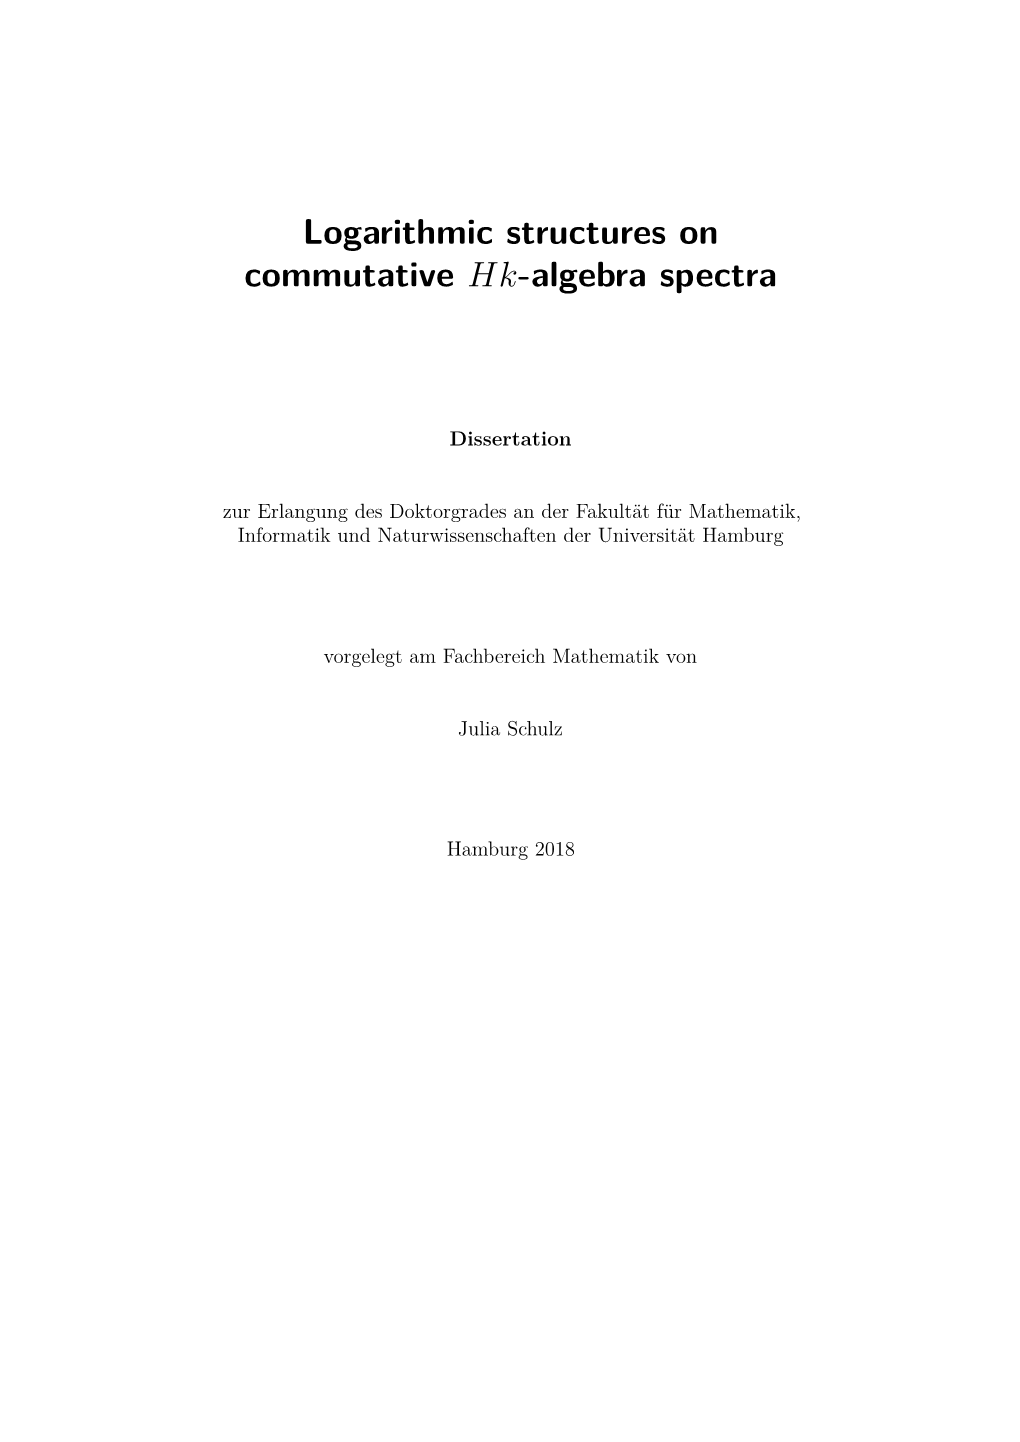 Logarithmic Structures on Commutative Hk-Algebra Spectra